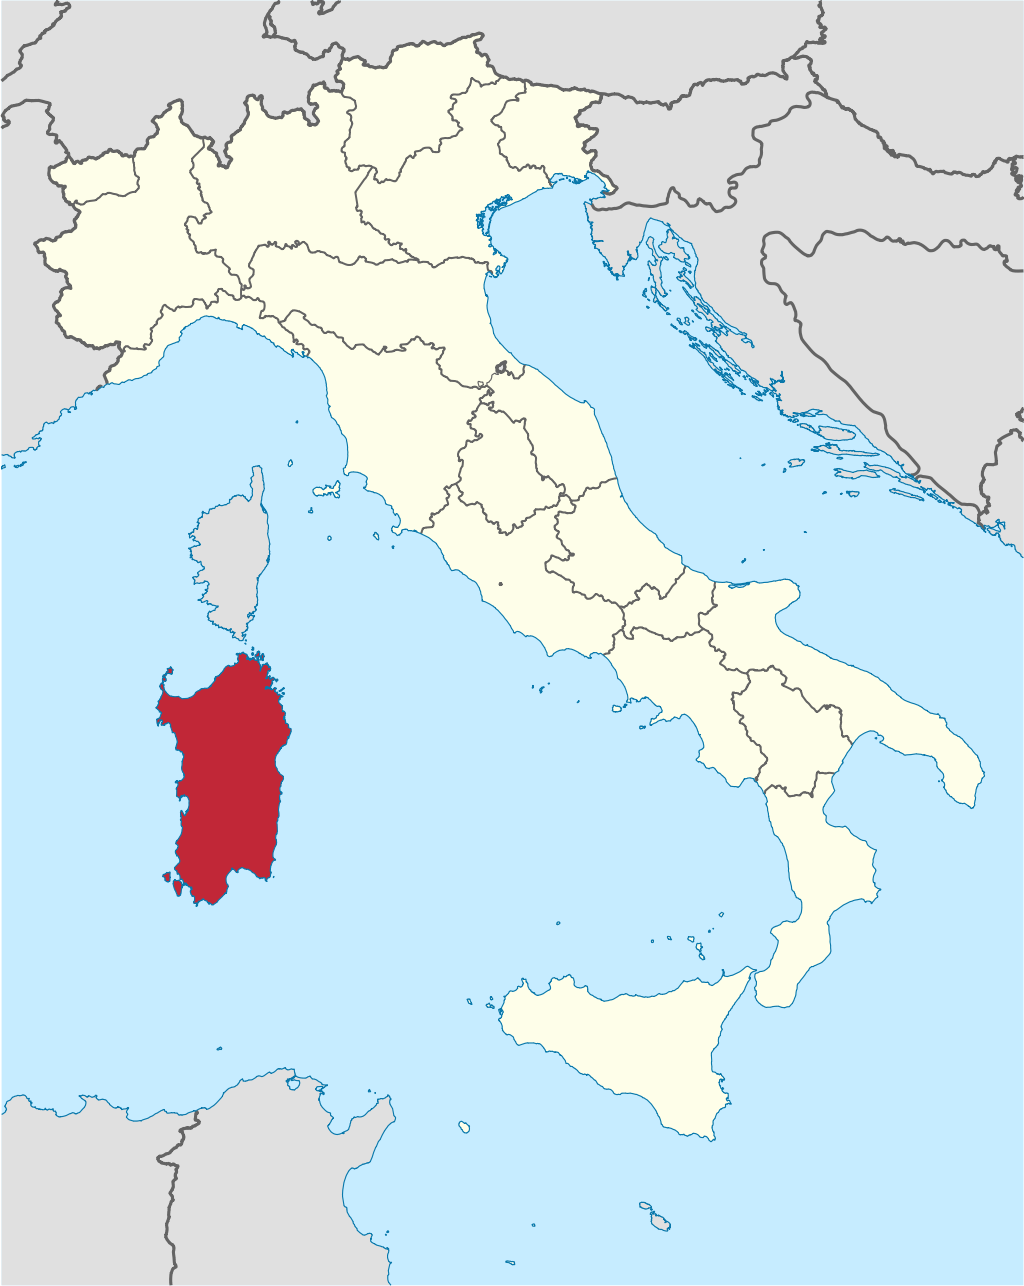 Sea Hotel Urbex locatie in of rond de regio Sardegna (Oristano), Italy